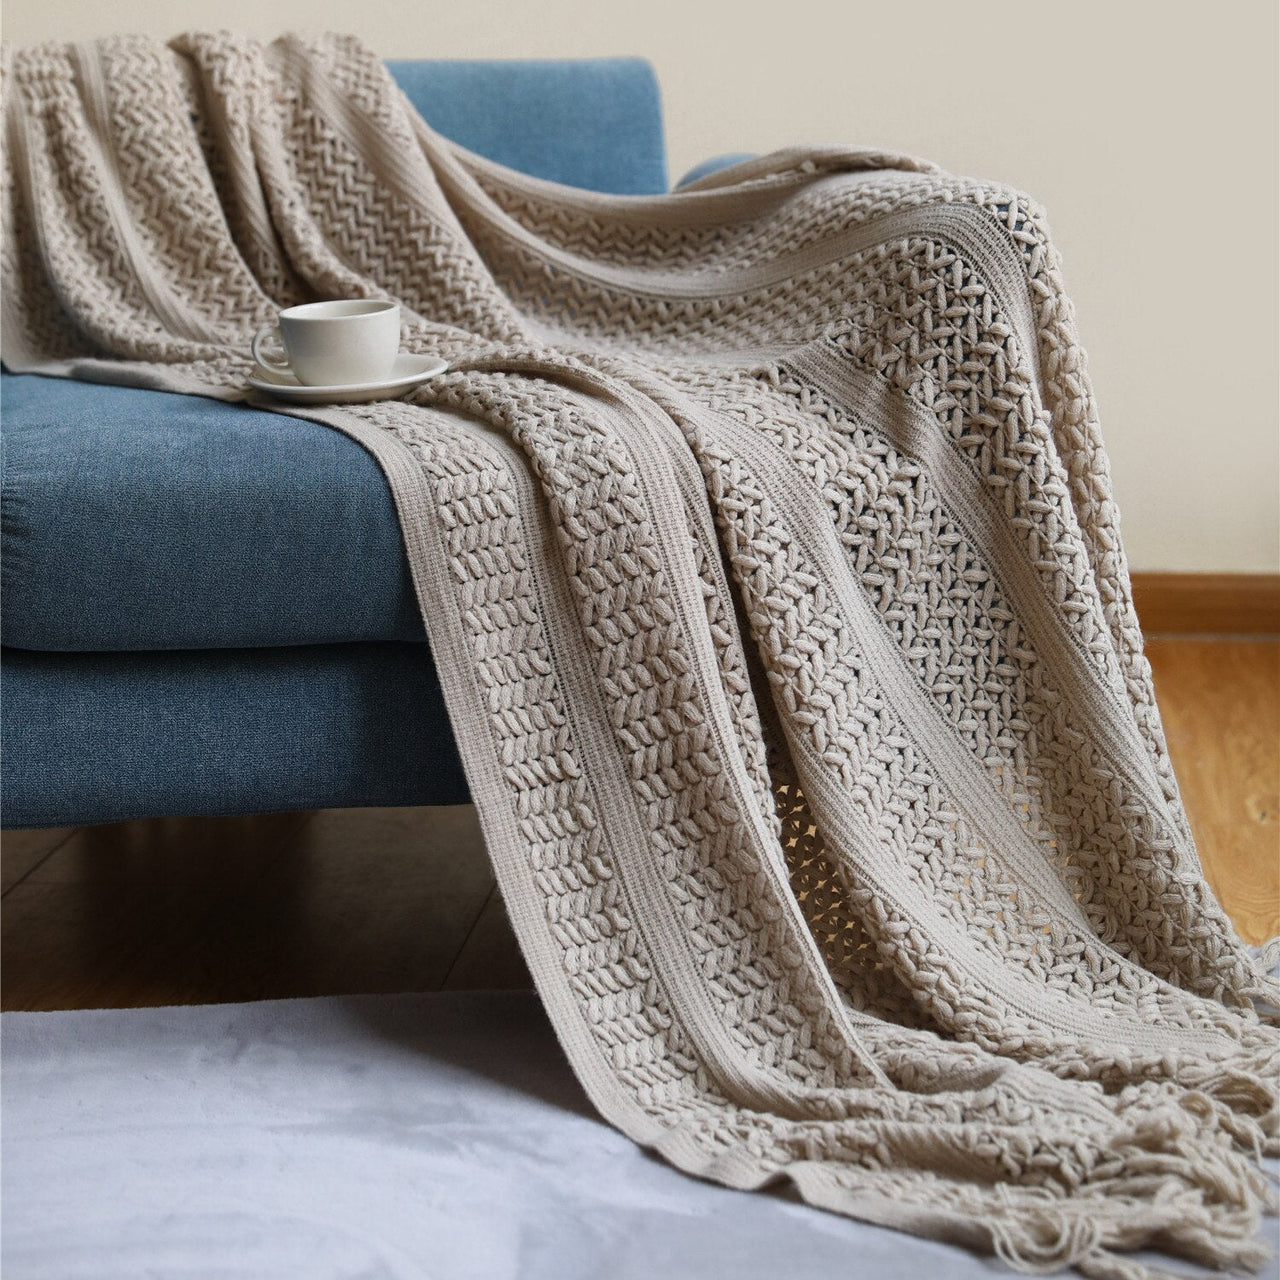 Decorative Sofa Throw Blanket with Tassel - Casatrail.com